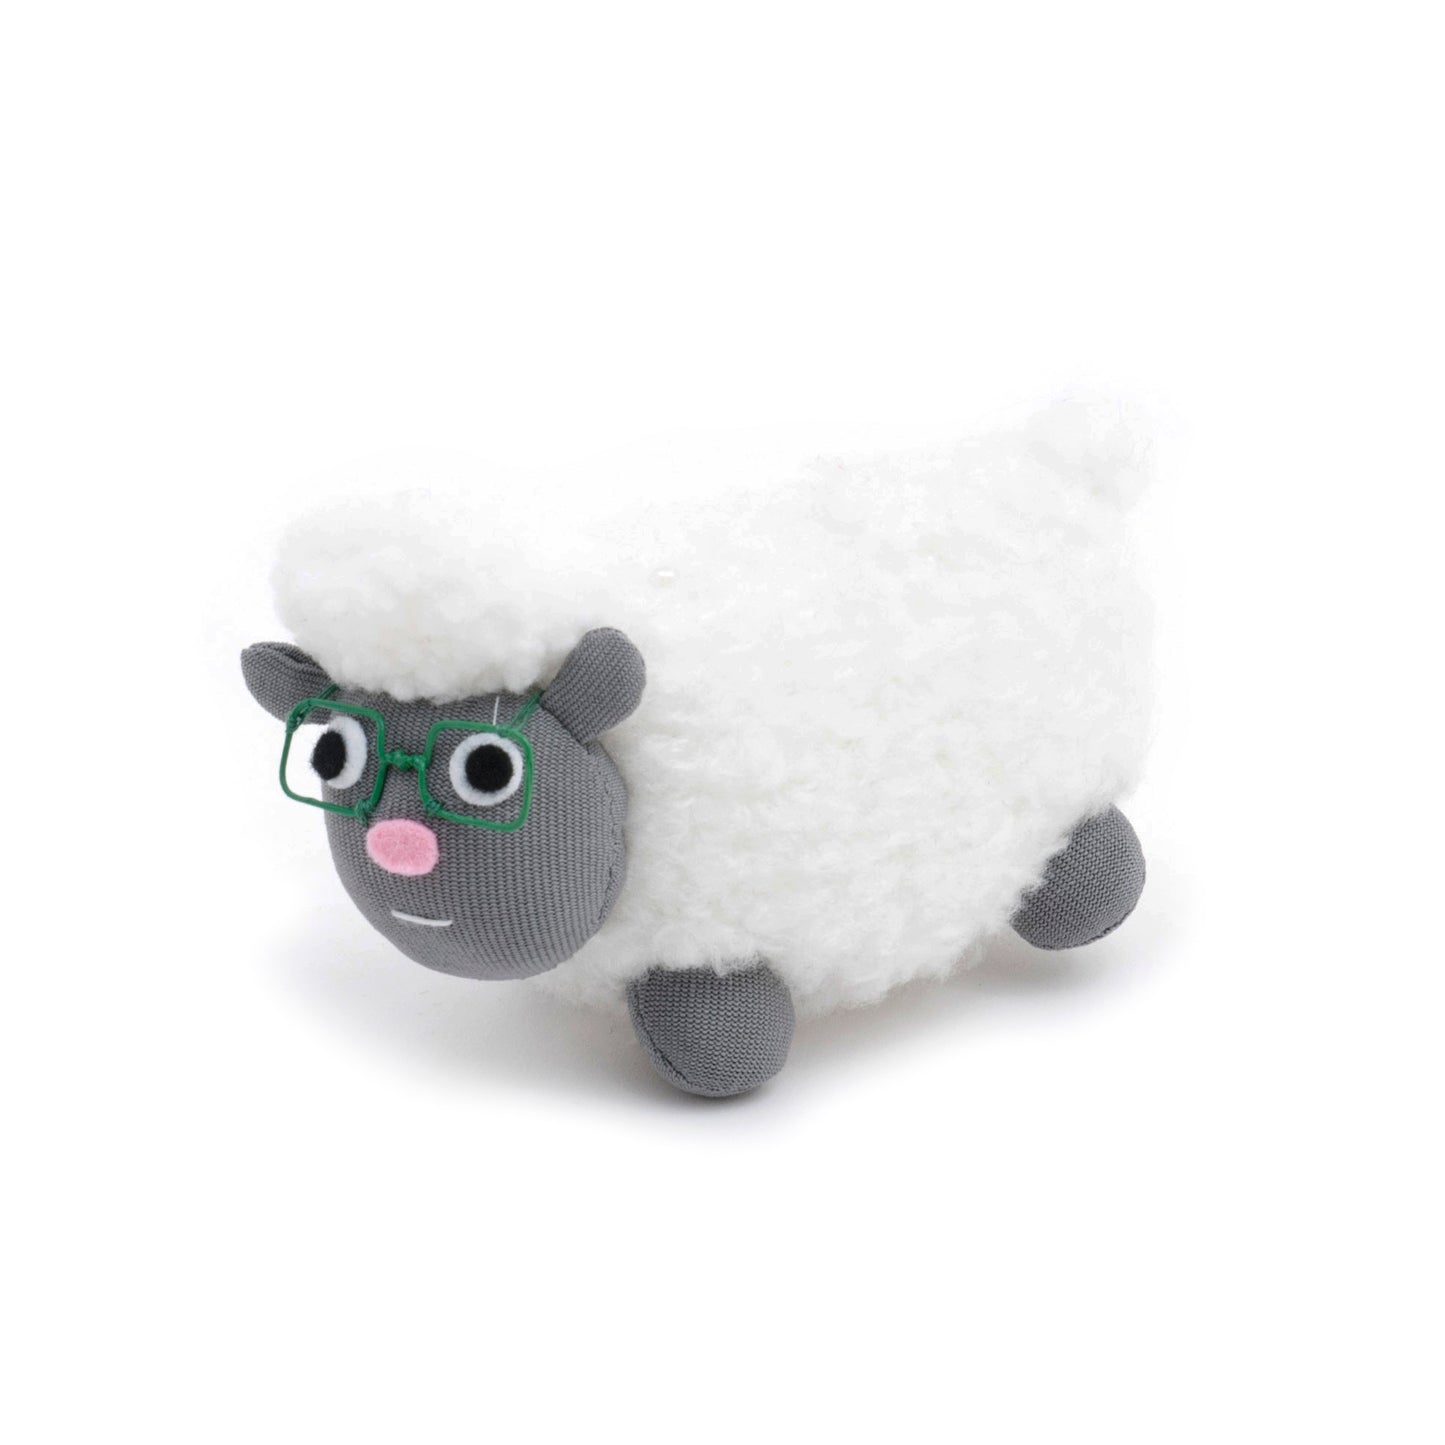 Pincushion: Sheep: Knitting Sheep